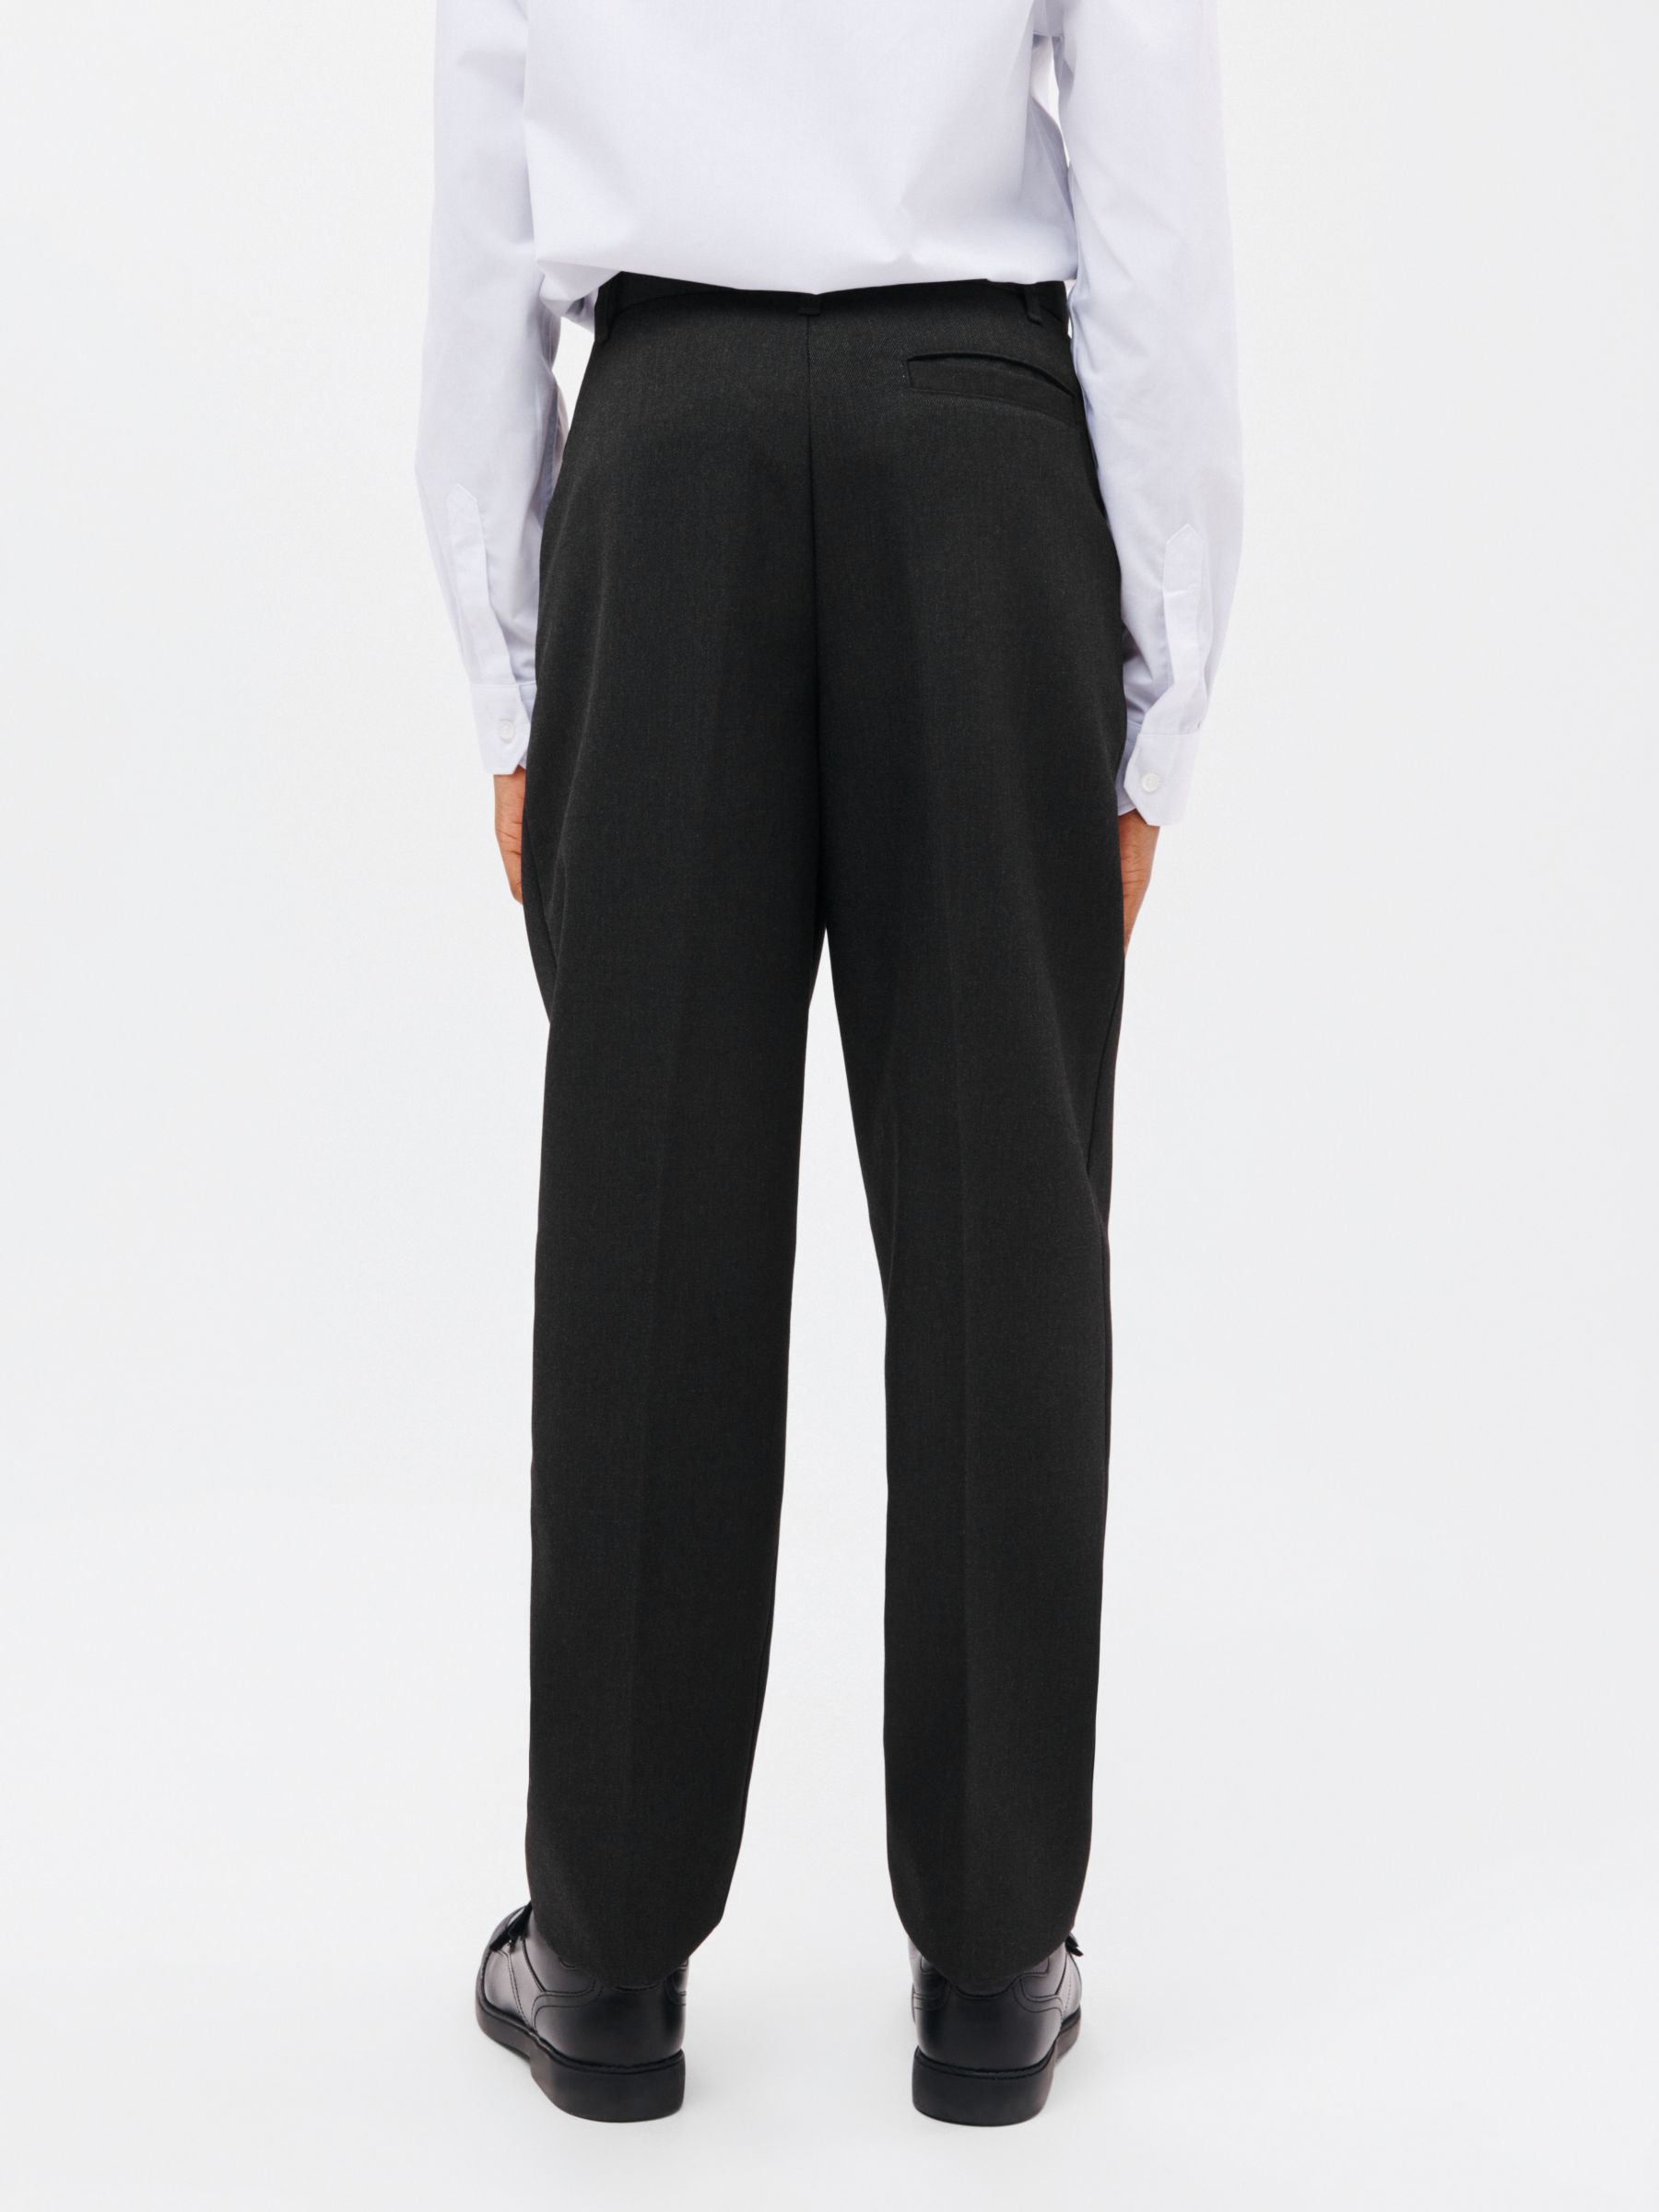 John Lewis School Uniform Grey Trouser 12 Years Brand New RRP £12 